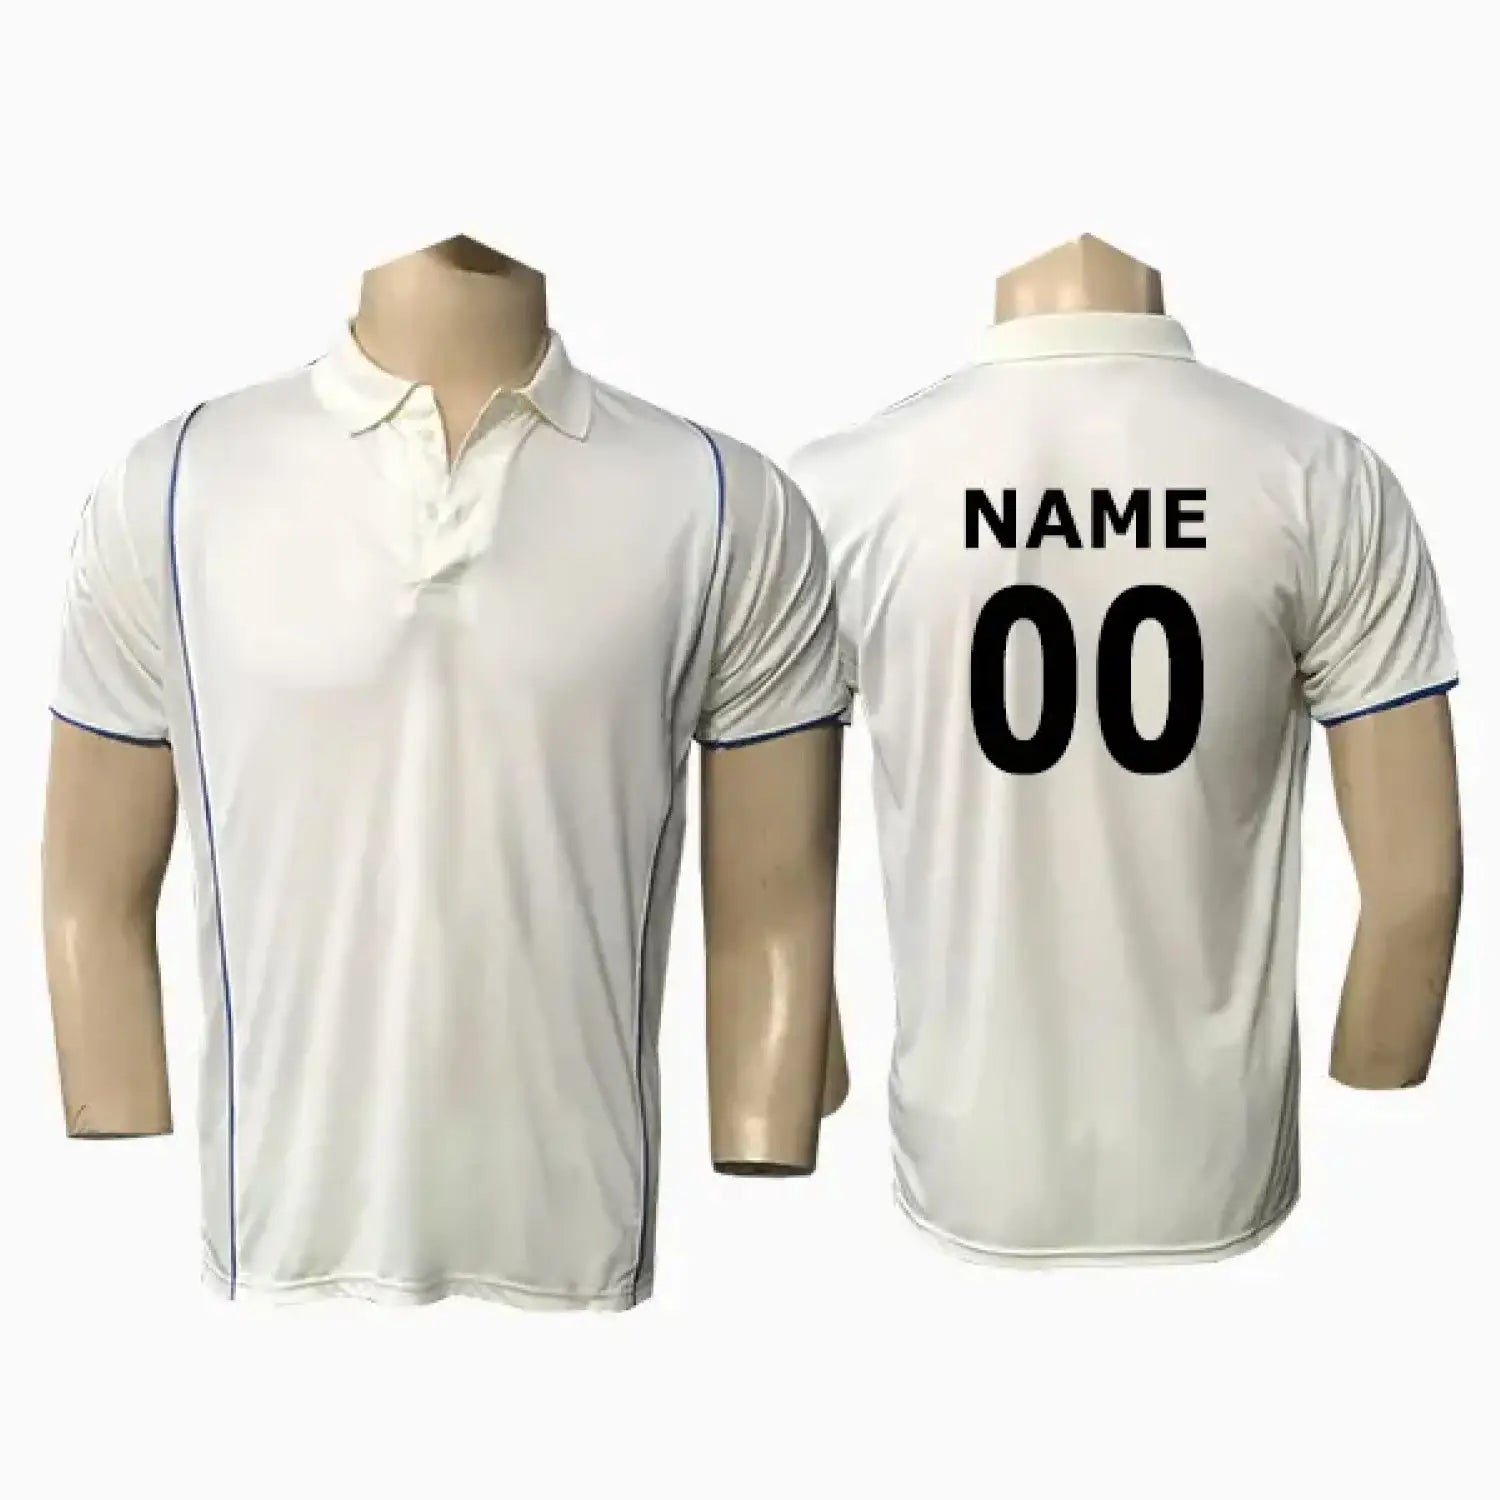 Custom Shirts Add on options - Add additional 10 shirts - CLOTHING CUSTOM